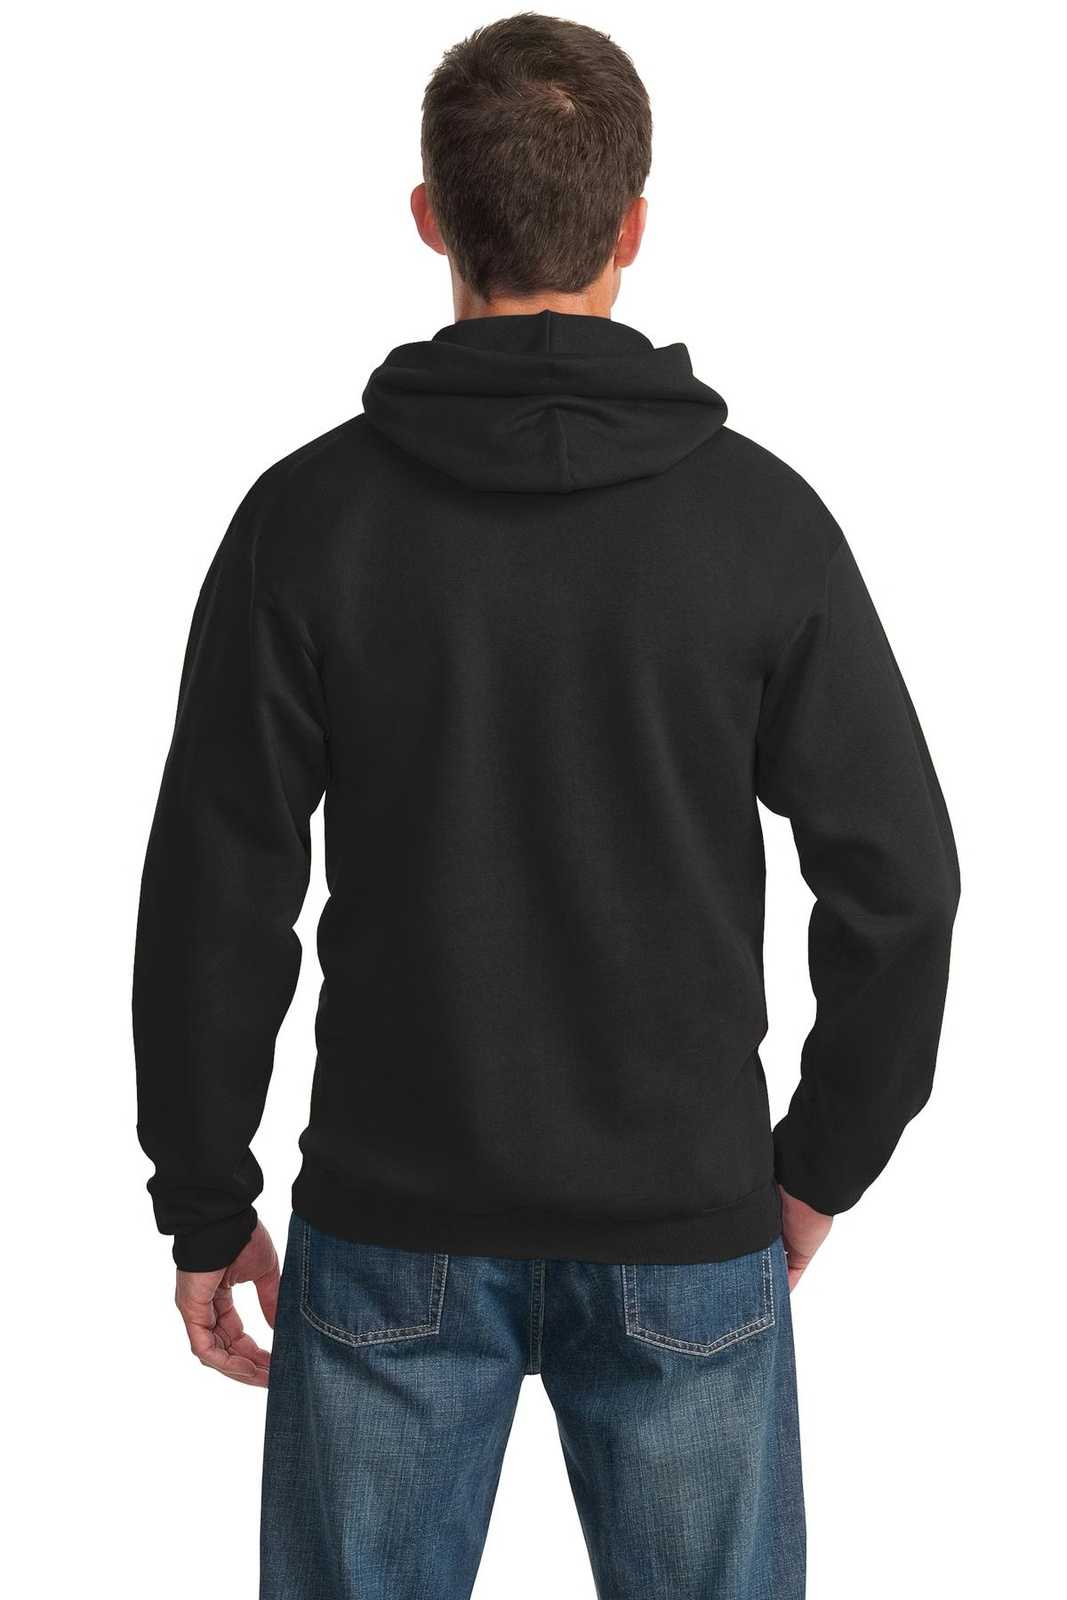 Port & Company PC90H Essential Fleece Pullover Hooded Sweatshirt - Jet Black - HIT a Double - 1